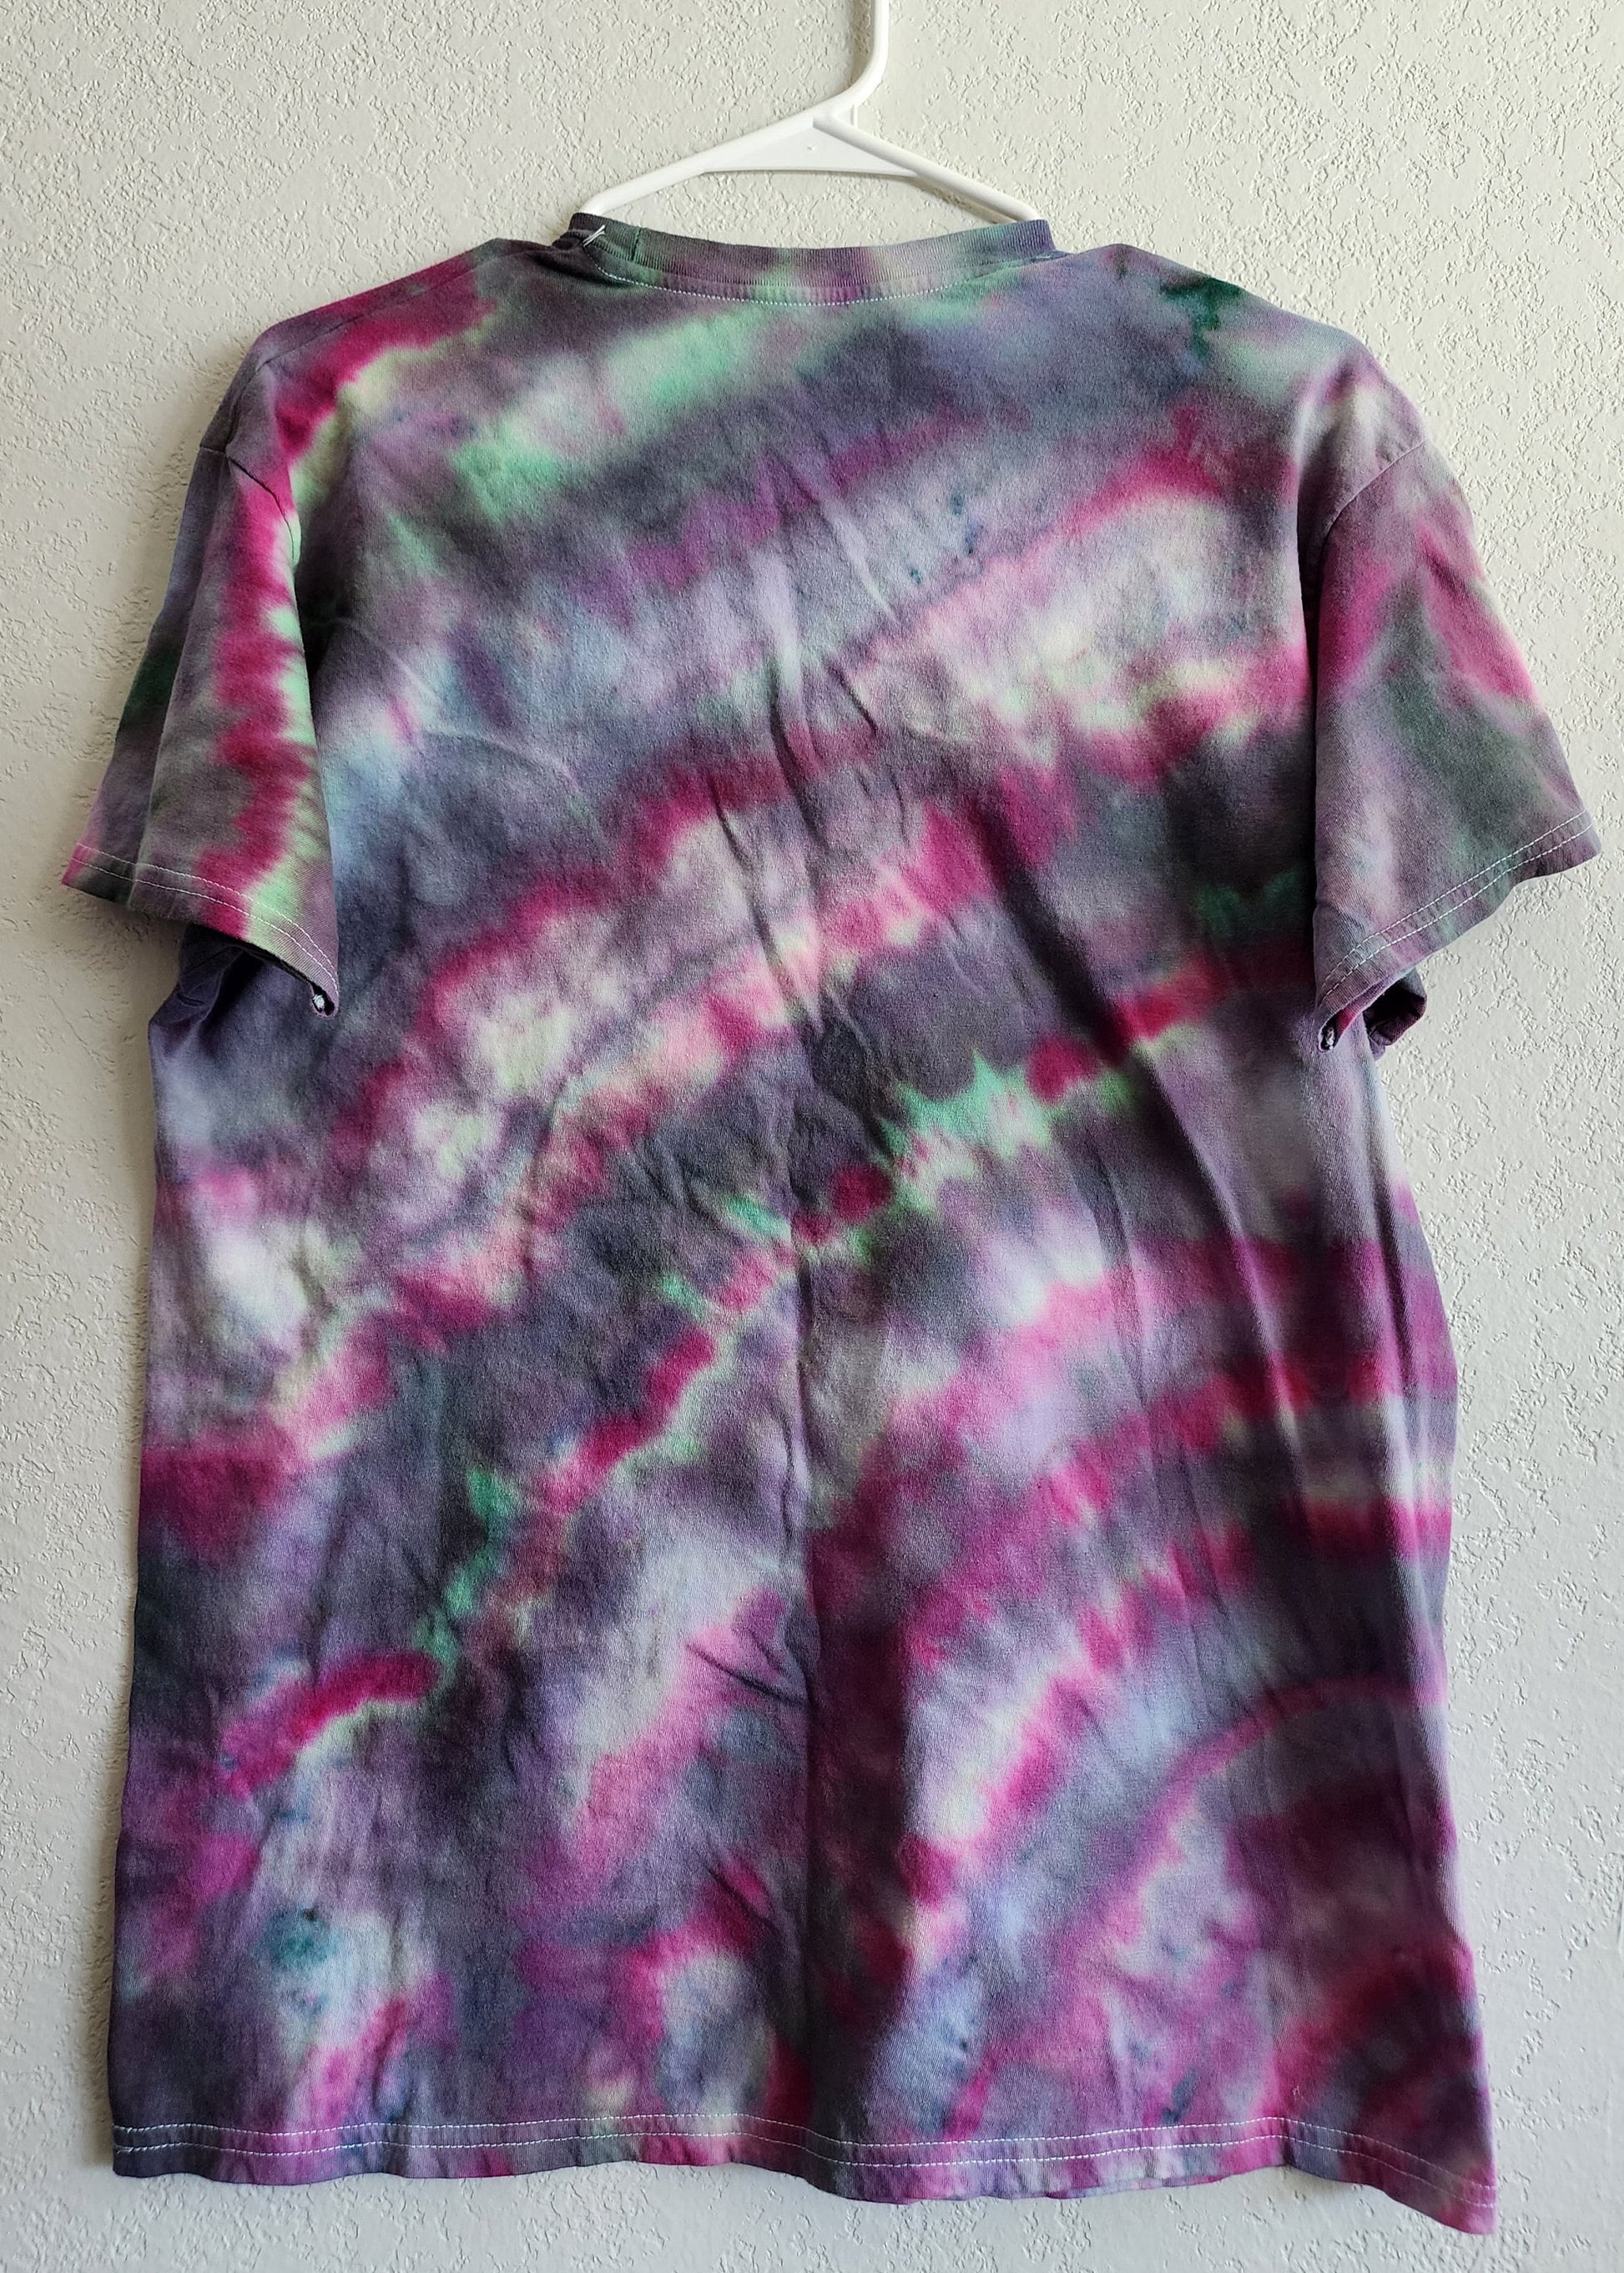 Dragon Fruit Twist Tie Dye T Shirt Customizable Unisex Size M